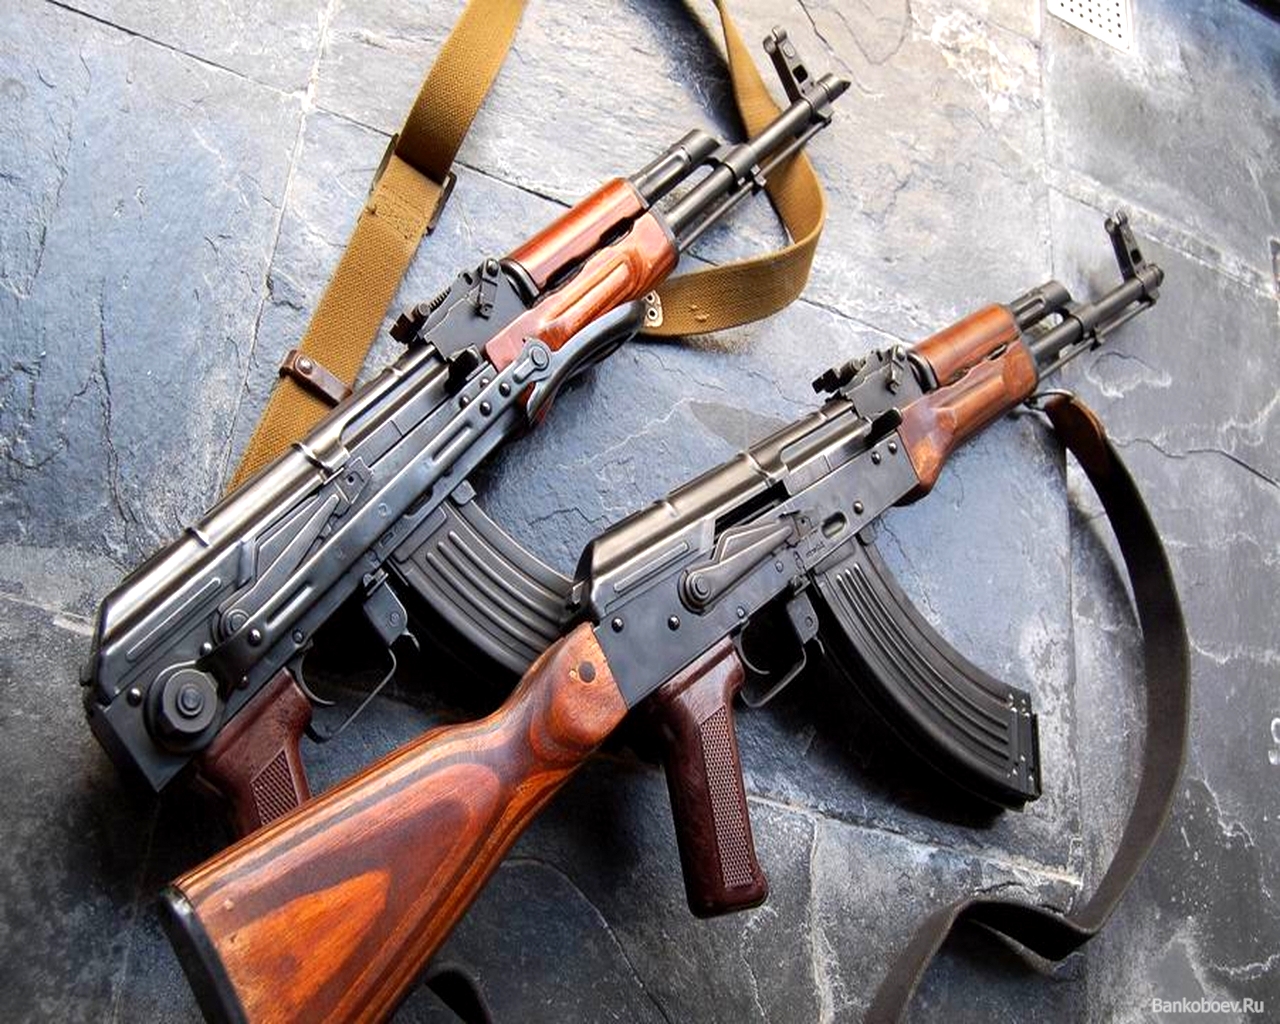 Kalashnikov Assault Rifle The Evolution Of A Masterpiece